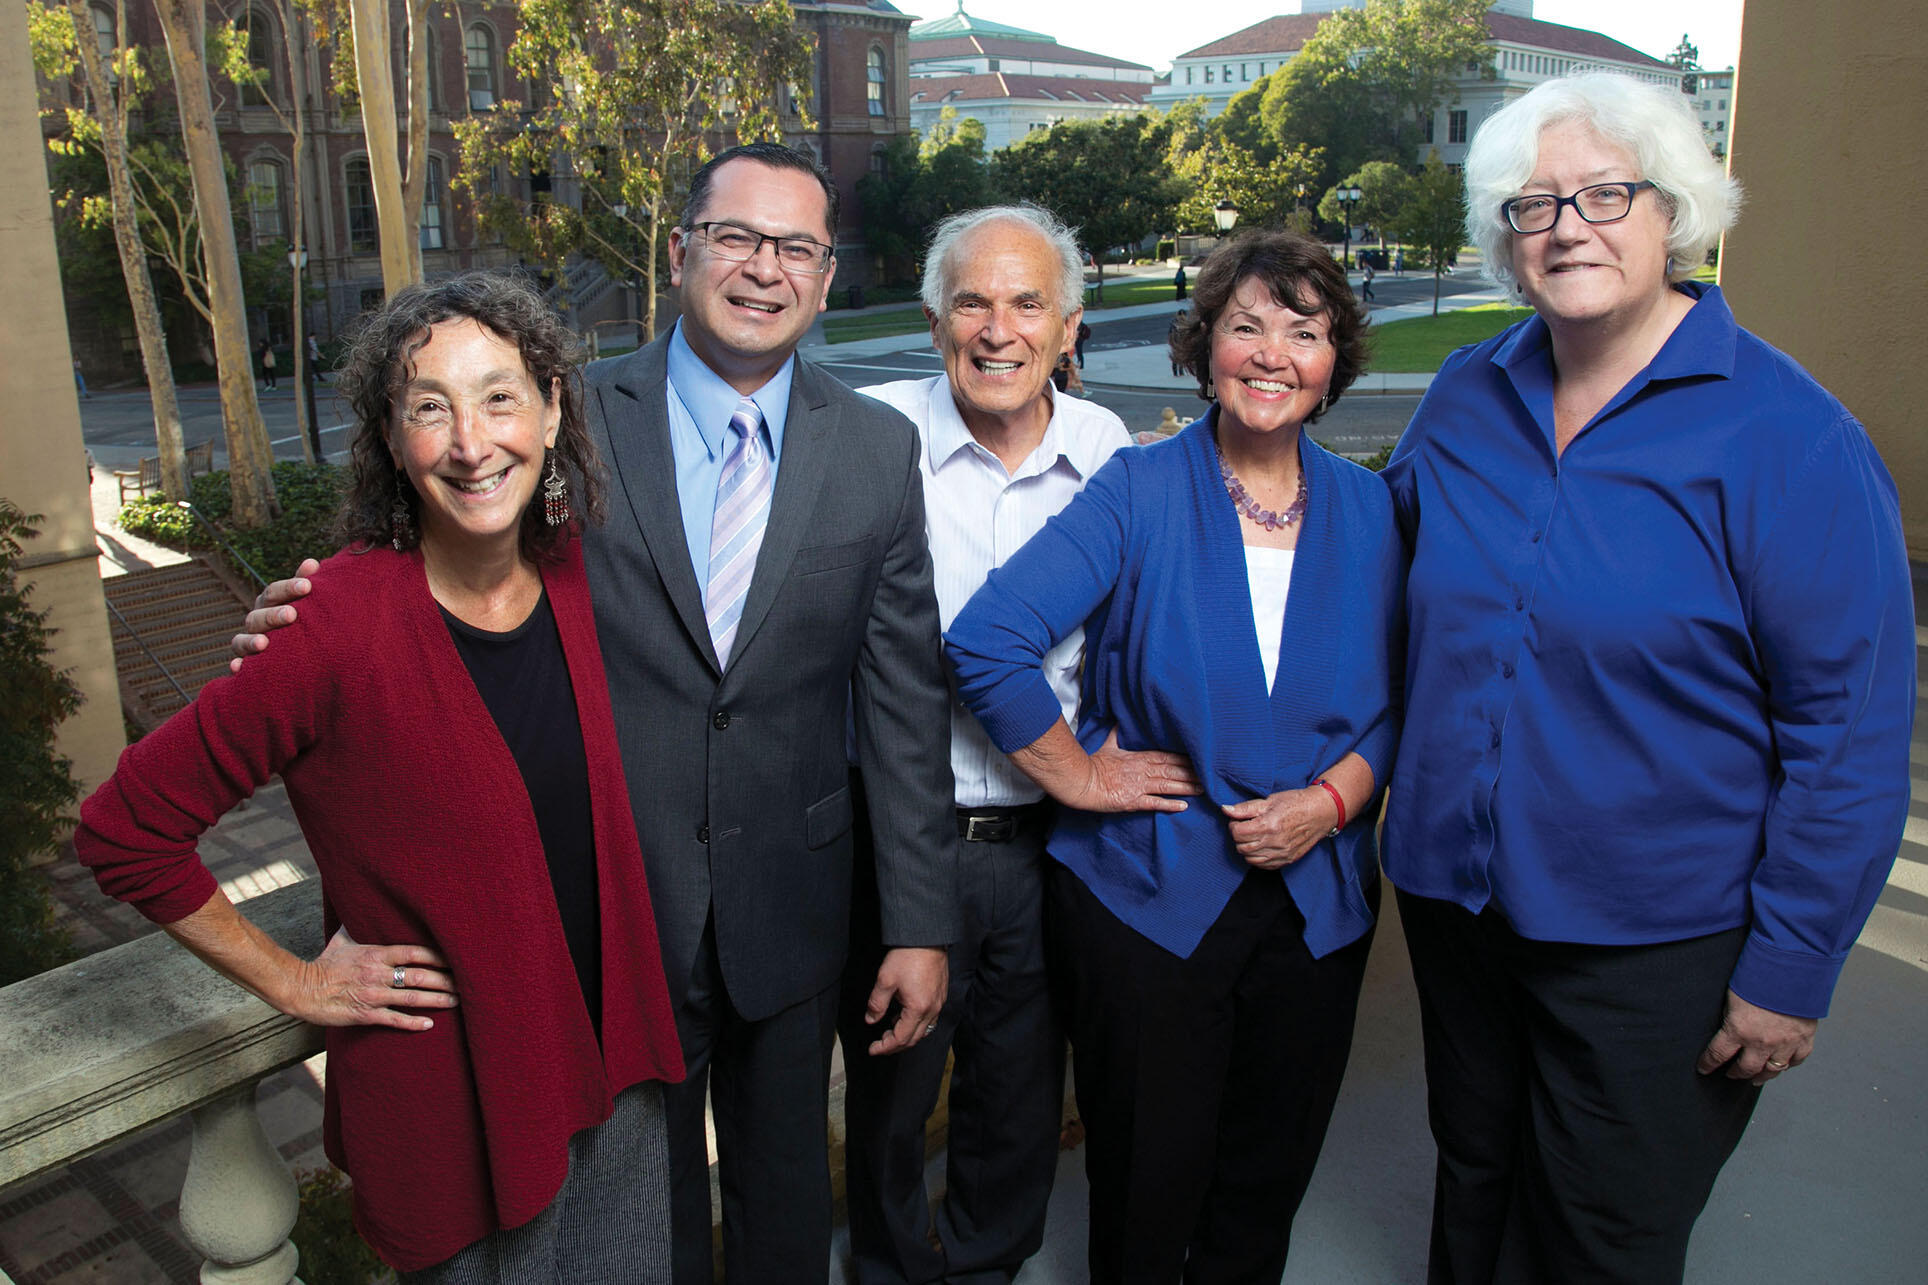 Karen Musalo, V. Manuel Pérez, Harley Shaiken, Beatriz Manz, and Rosemary Joyce. (Photo by Jim Block.)